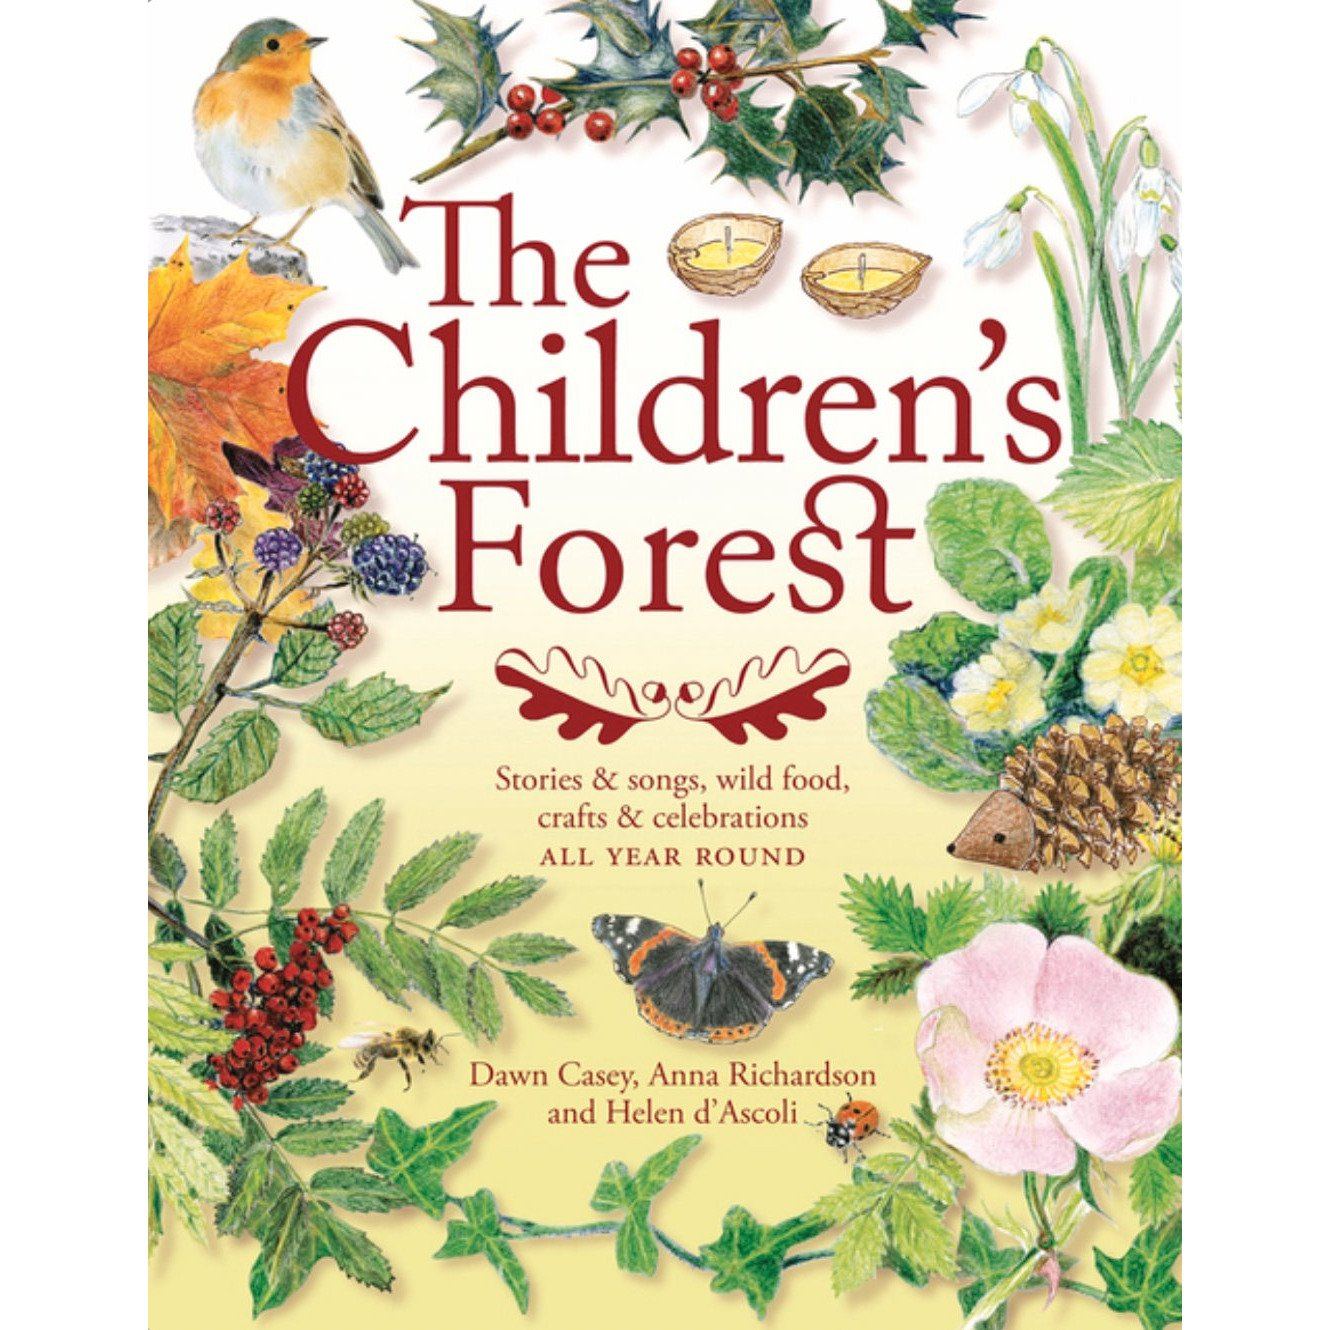 The Children’s Forest, Kids Crafts, Nature Crafts, Folklore, Waldorf Crafts - Alder & Alouette